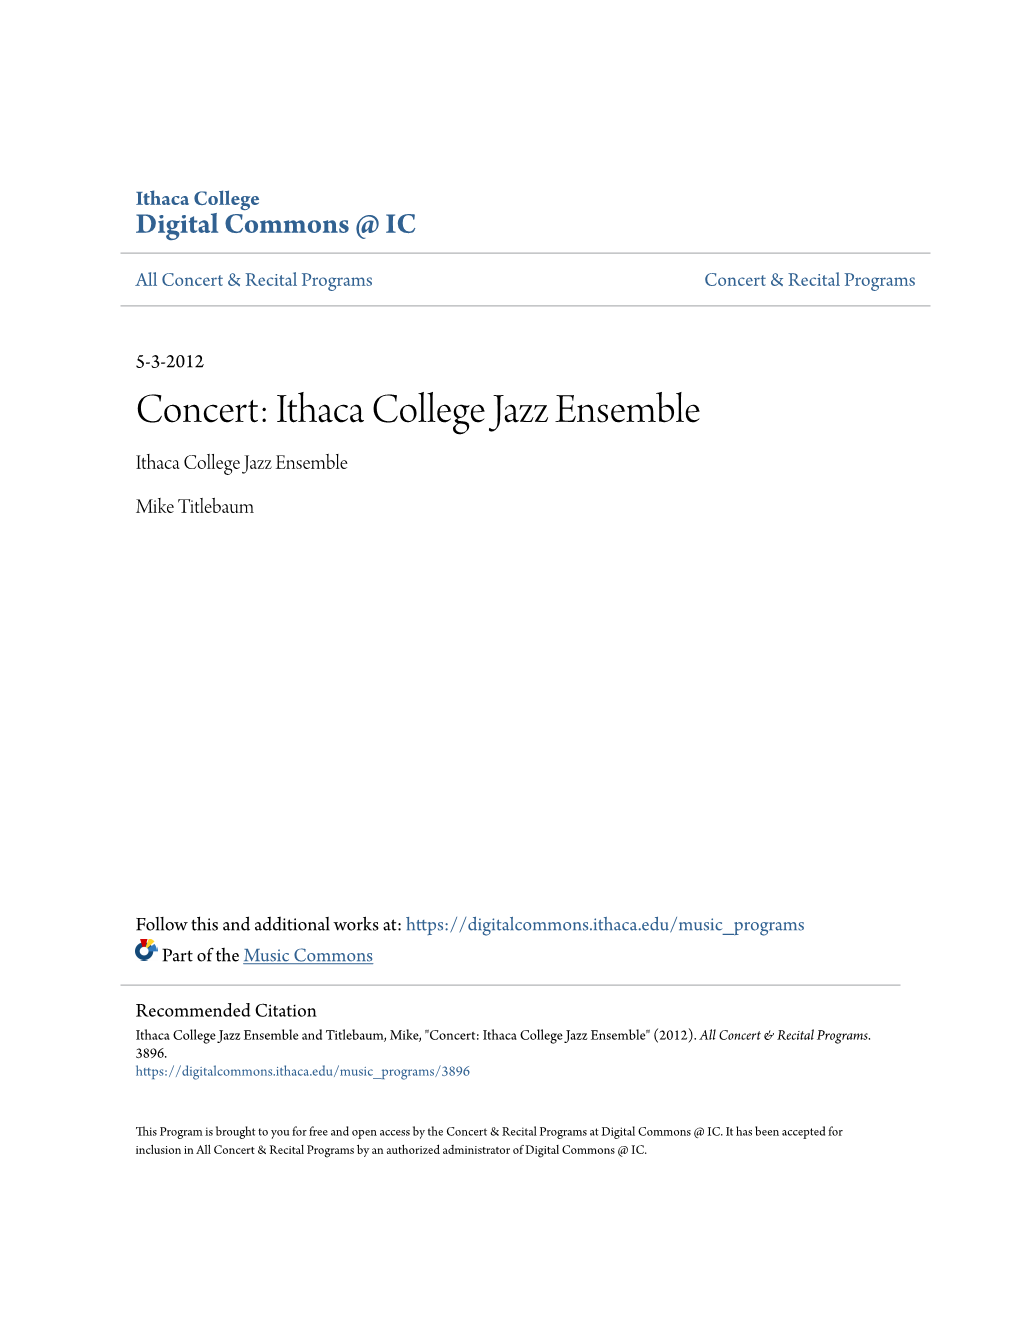 Concert: Ithaca College Jazz Ensemble Ithaca College Jazz Ensemble